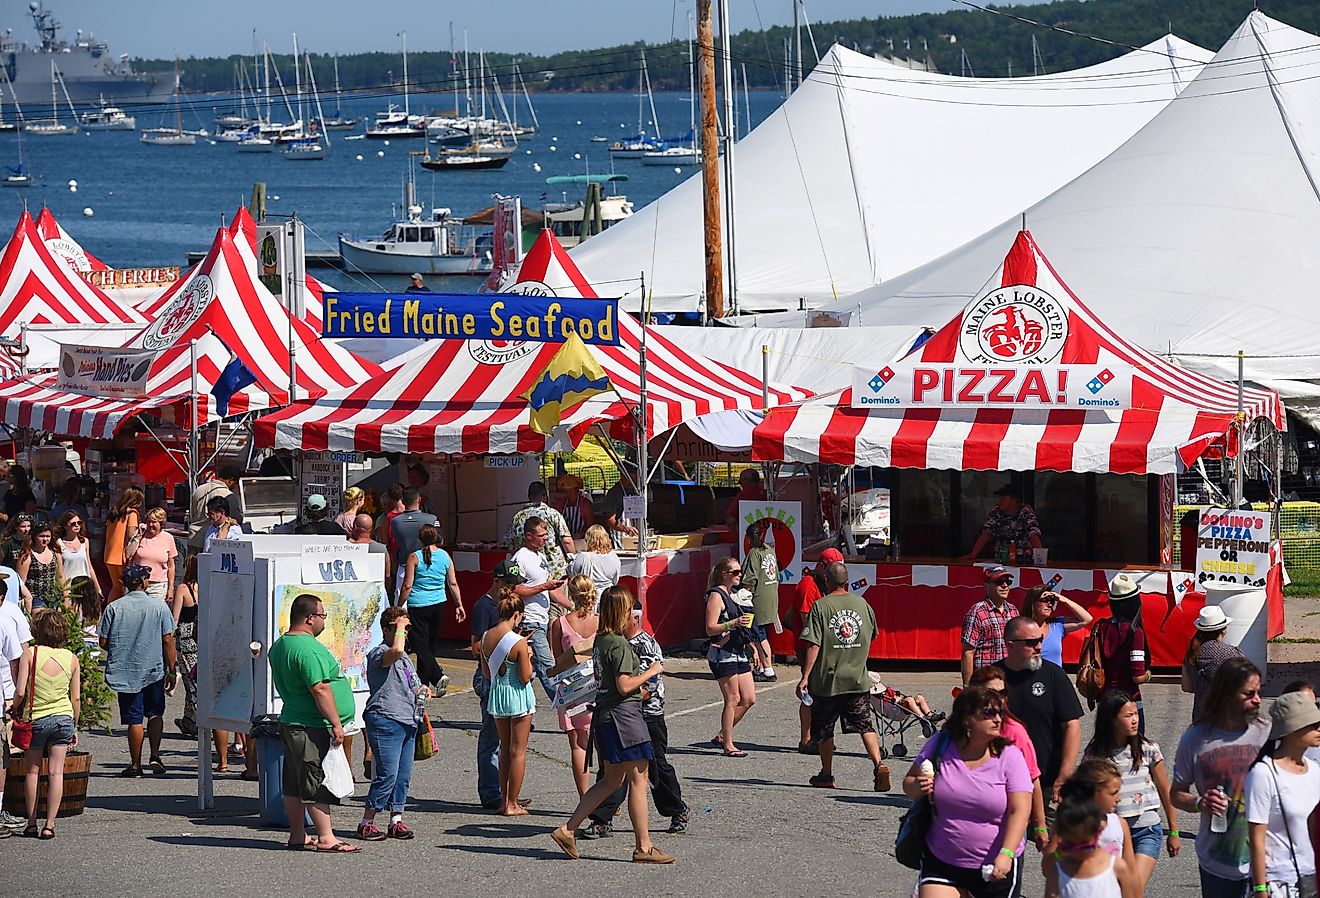 Rockland Lobster Festival in summer, Rockland, Maine. Image credit Wangkun Jia via Shutterstock